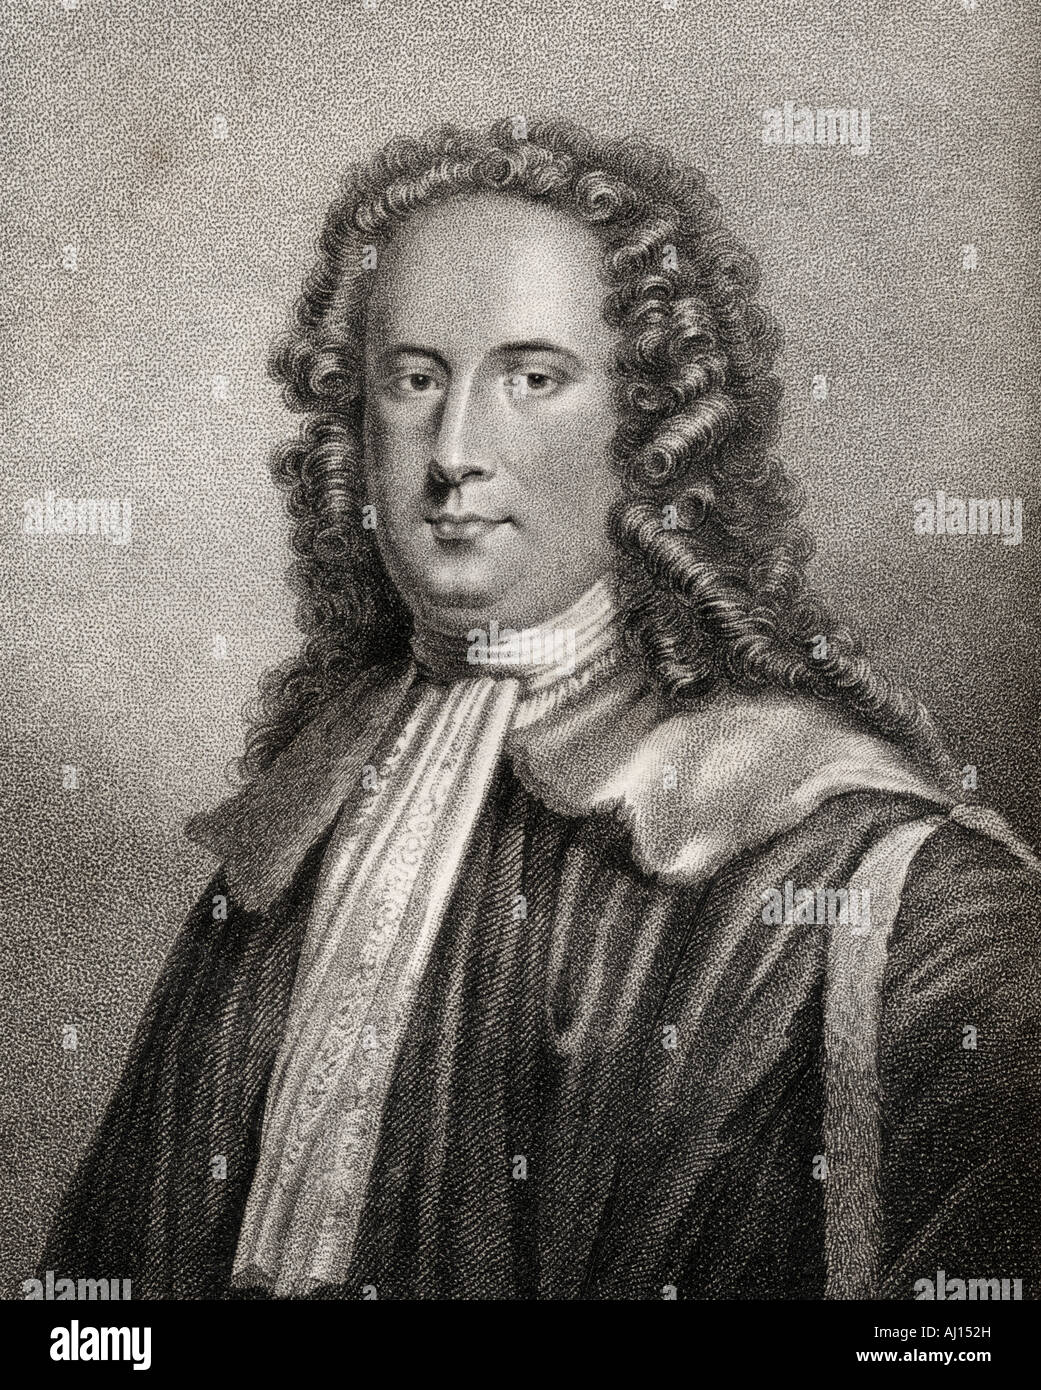 John Shute Barrington, 1° Visconte Barrington, 1678 - 1734. Avvocato e teologo inglese. Foto Stock